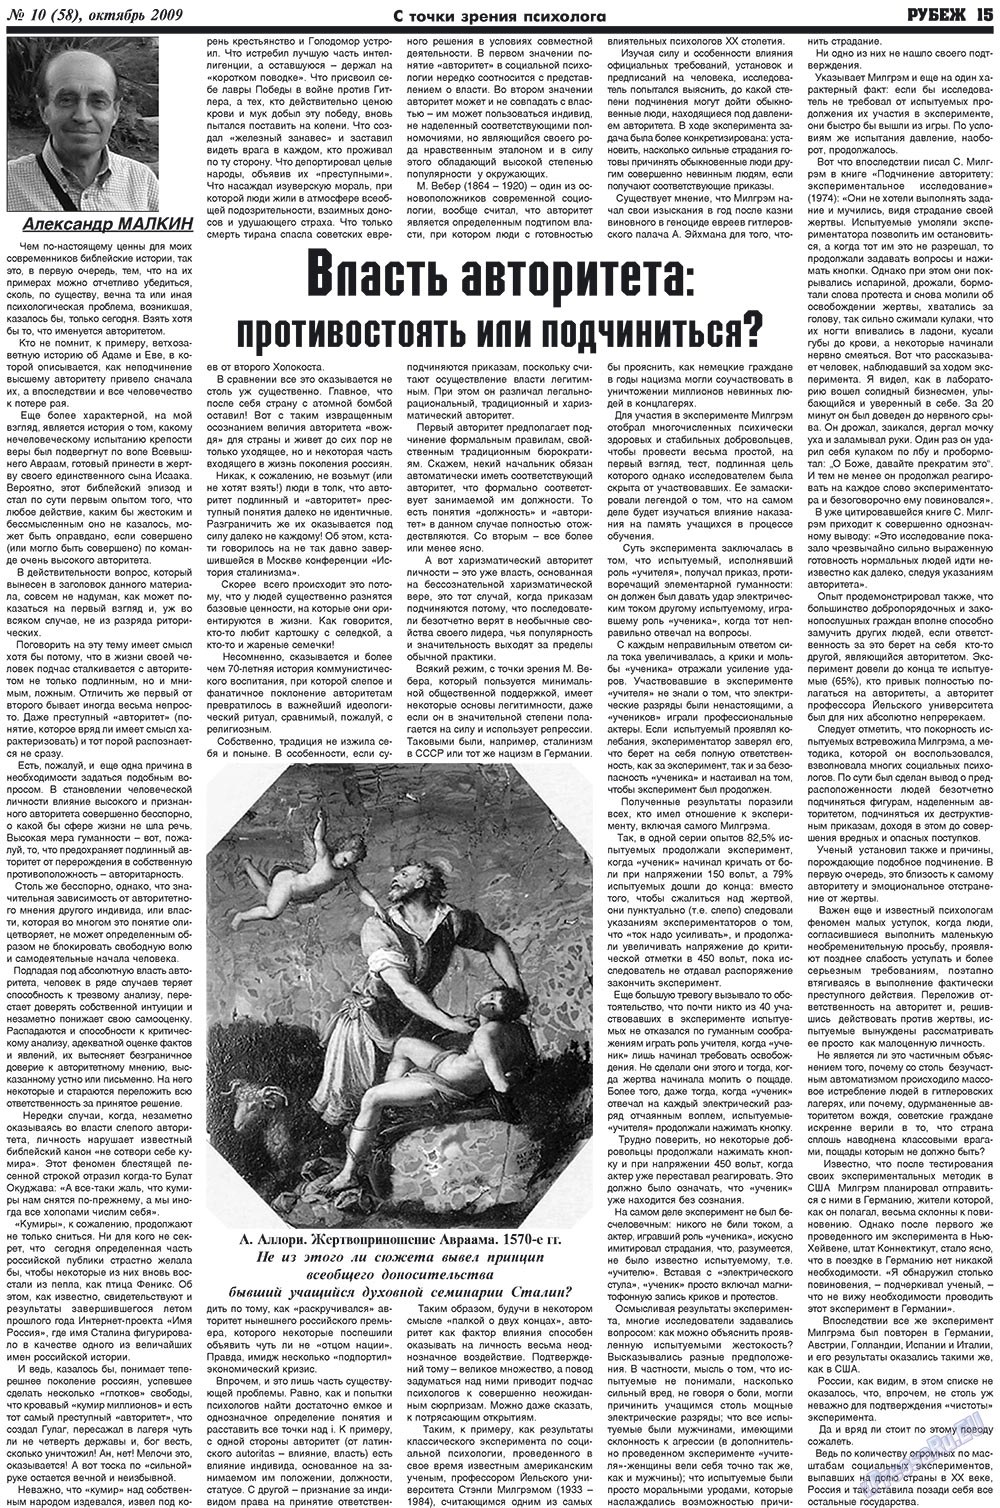 Рубеж, газета. 2009 №10 стр.15